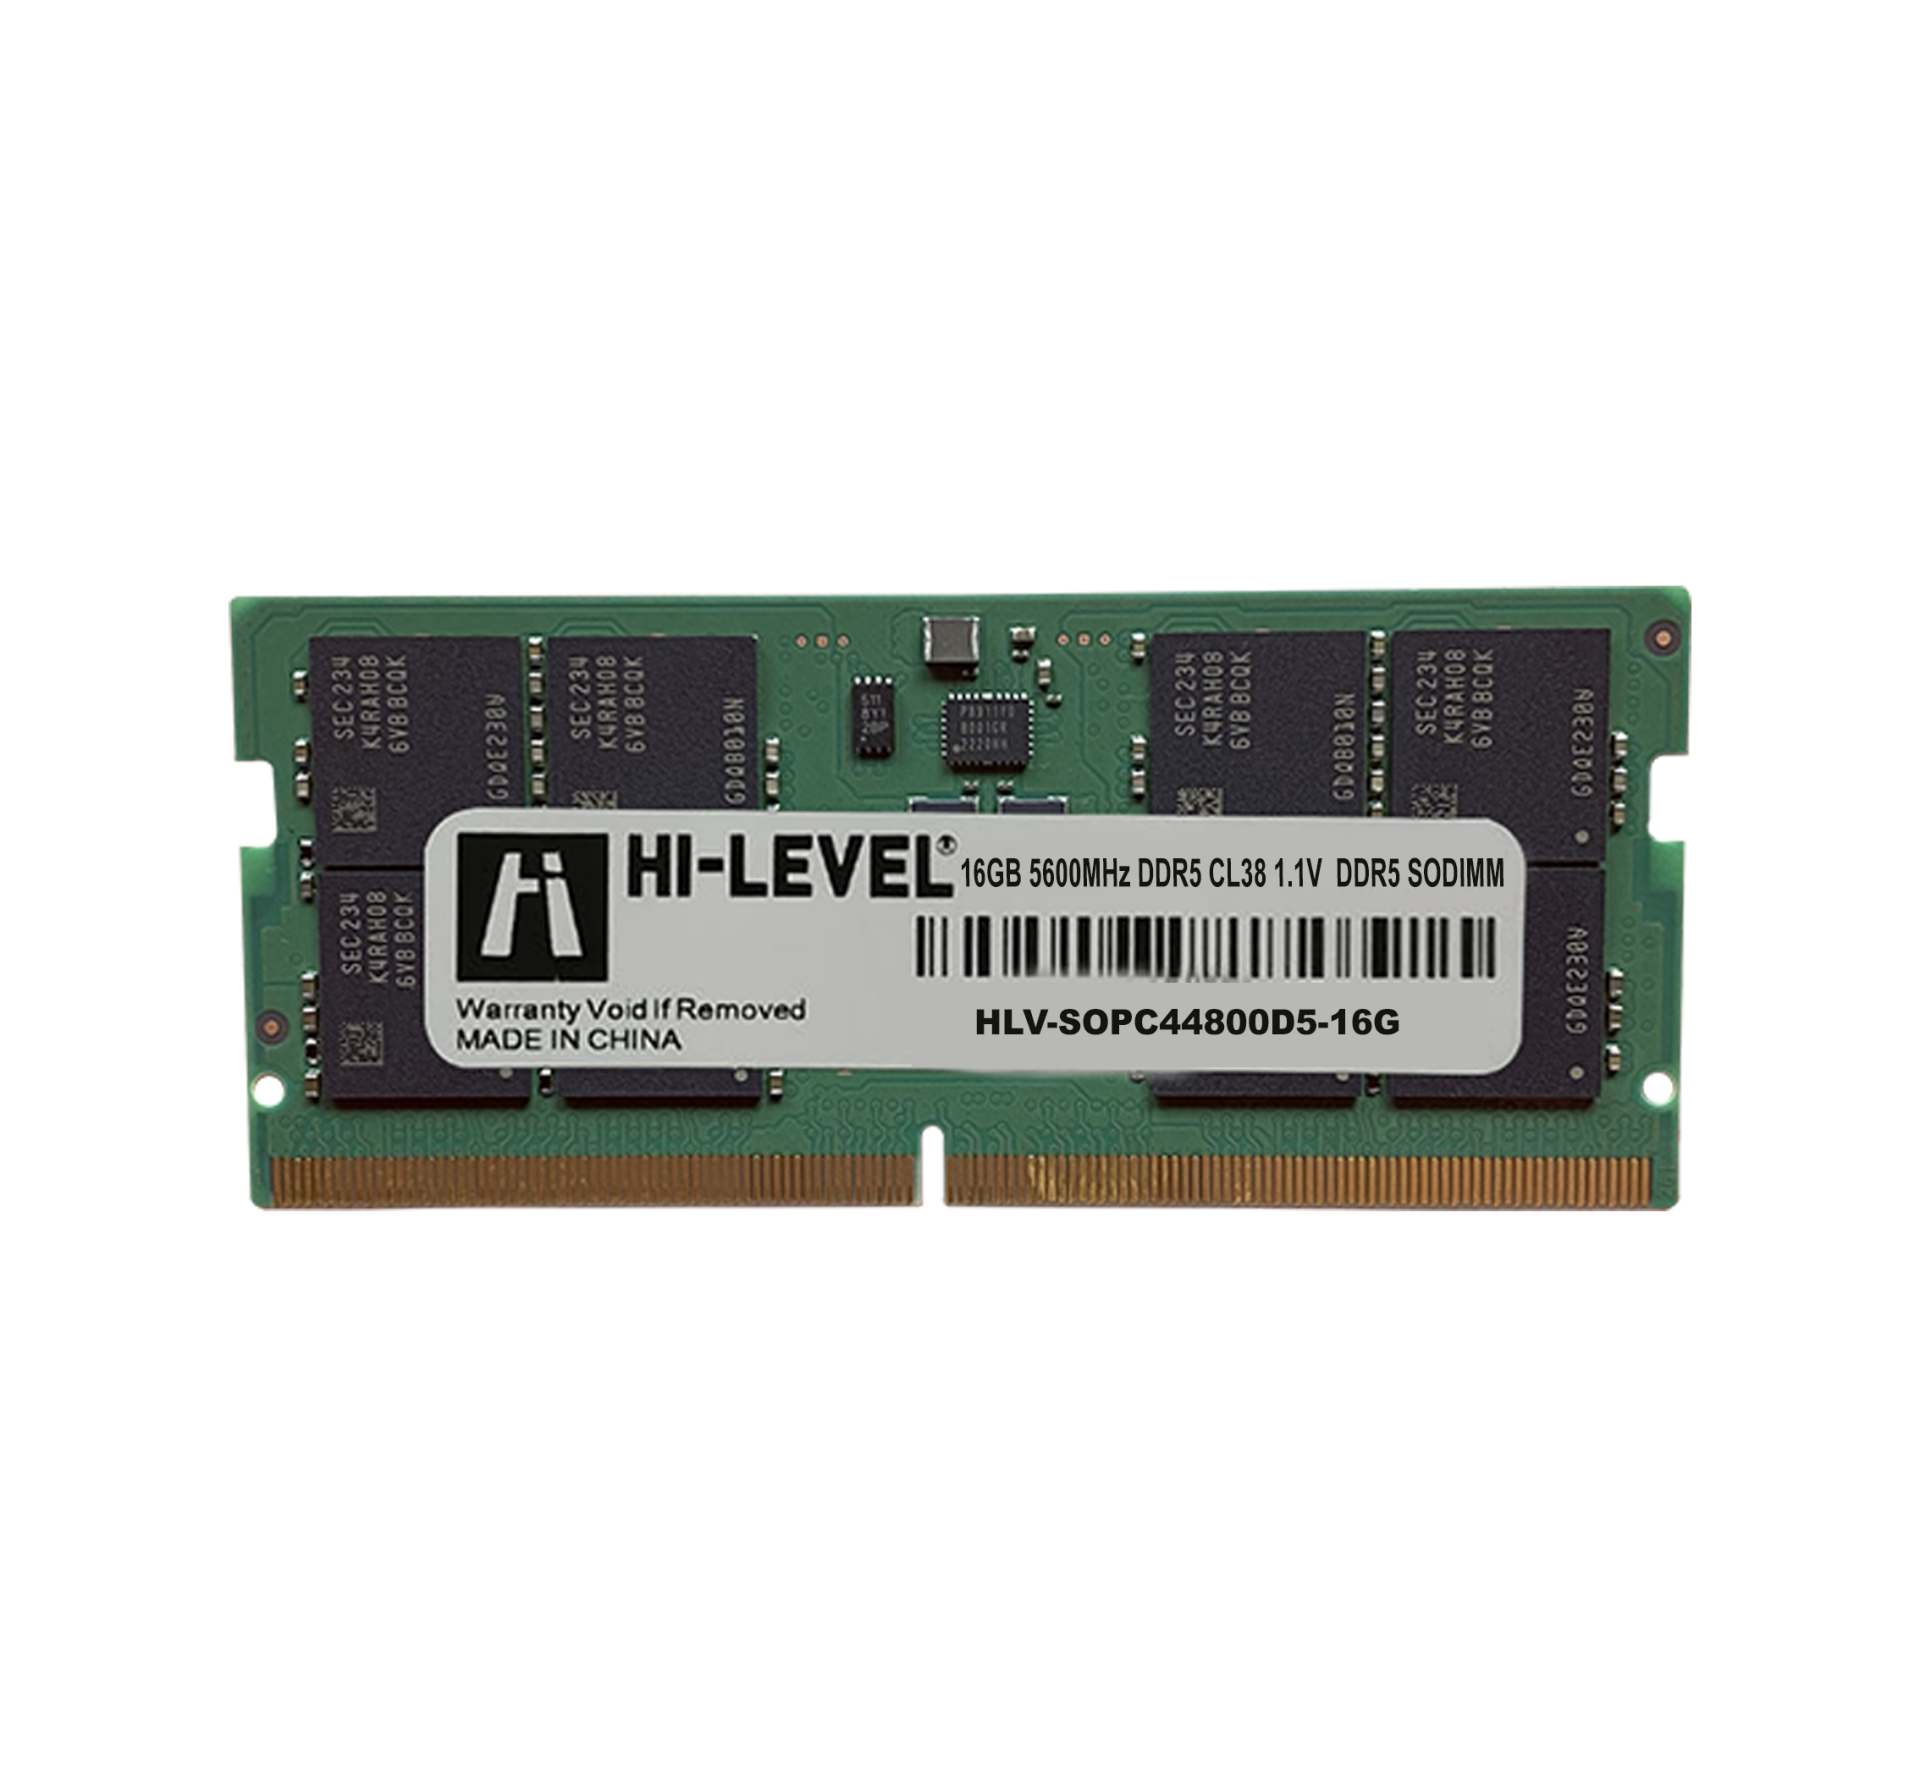 HI-LEVEL 16GB 5600MHz DDR5 CL38 1.1V  DDR5 SODIMM RAM